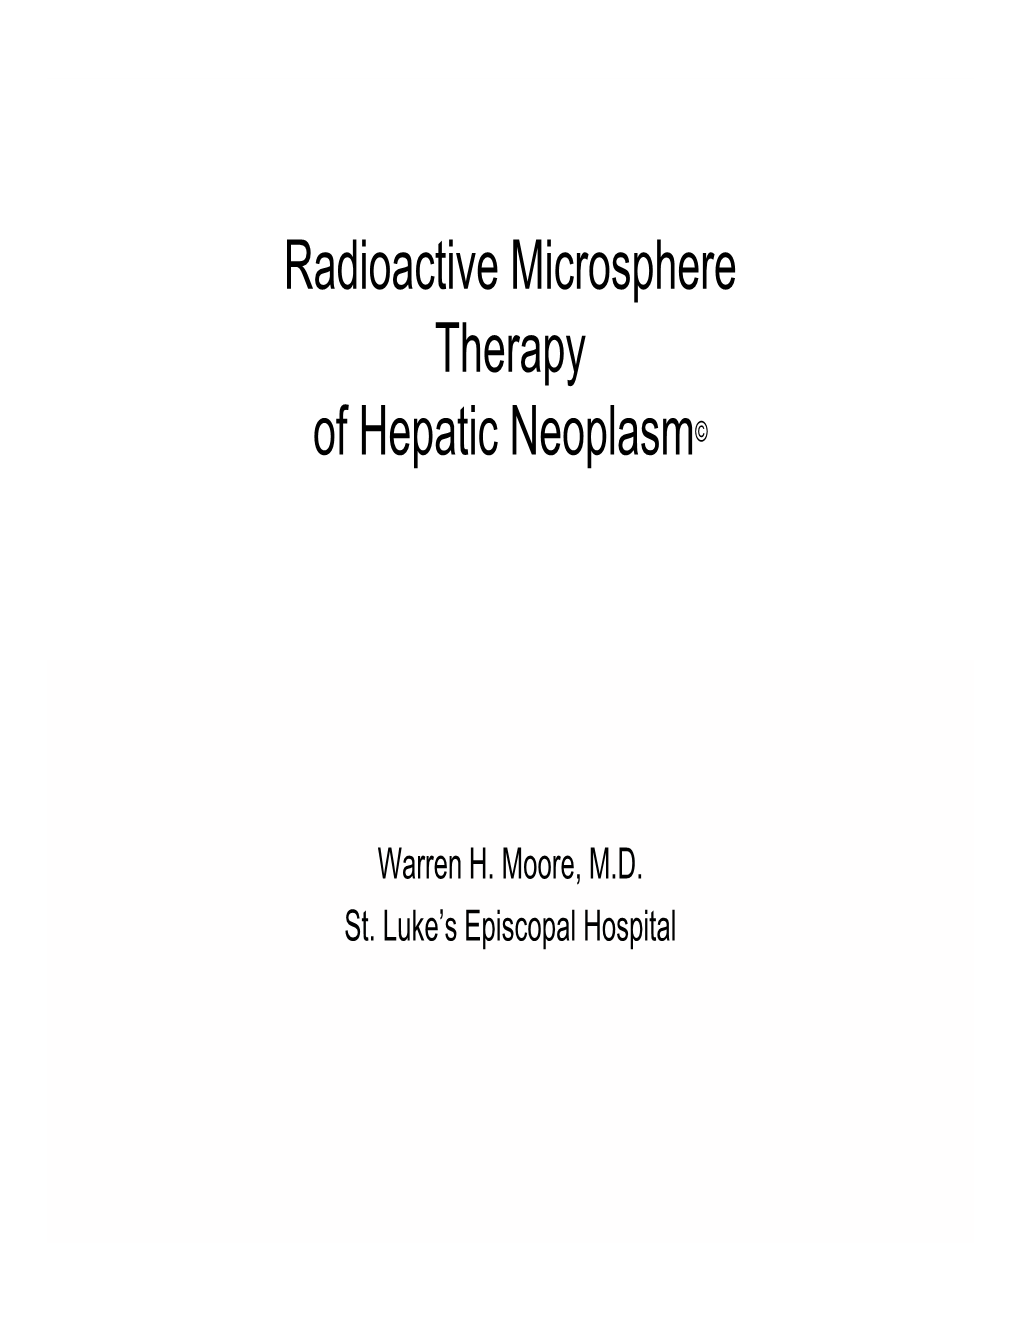 Radioactive Microsphere Therapy of Hepatic Neoplasm©